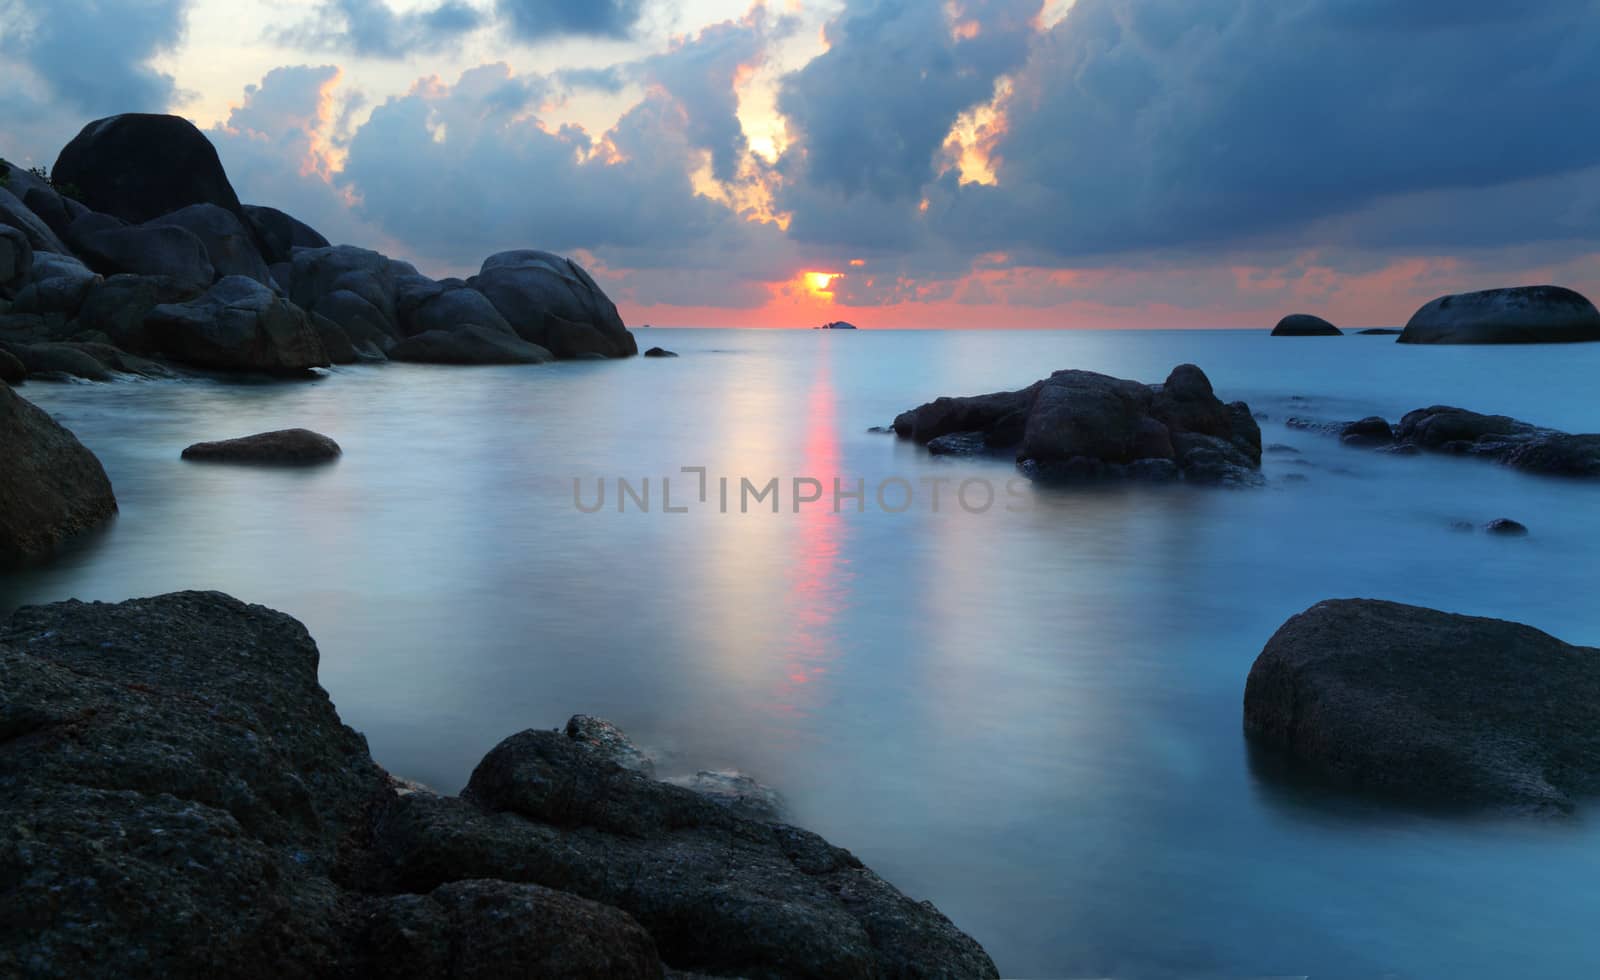 Dramatic sunset in rocky beach, Tanjung Pandan, Belitung, Indonesia. Long exposure shot